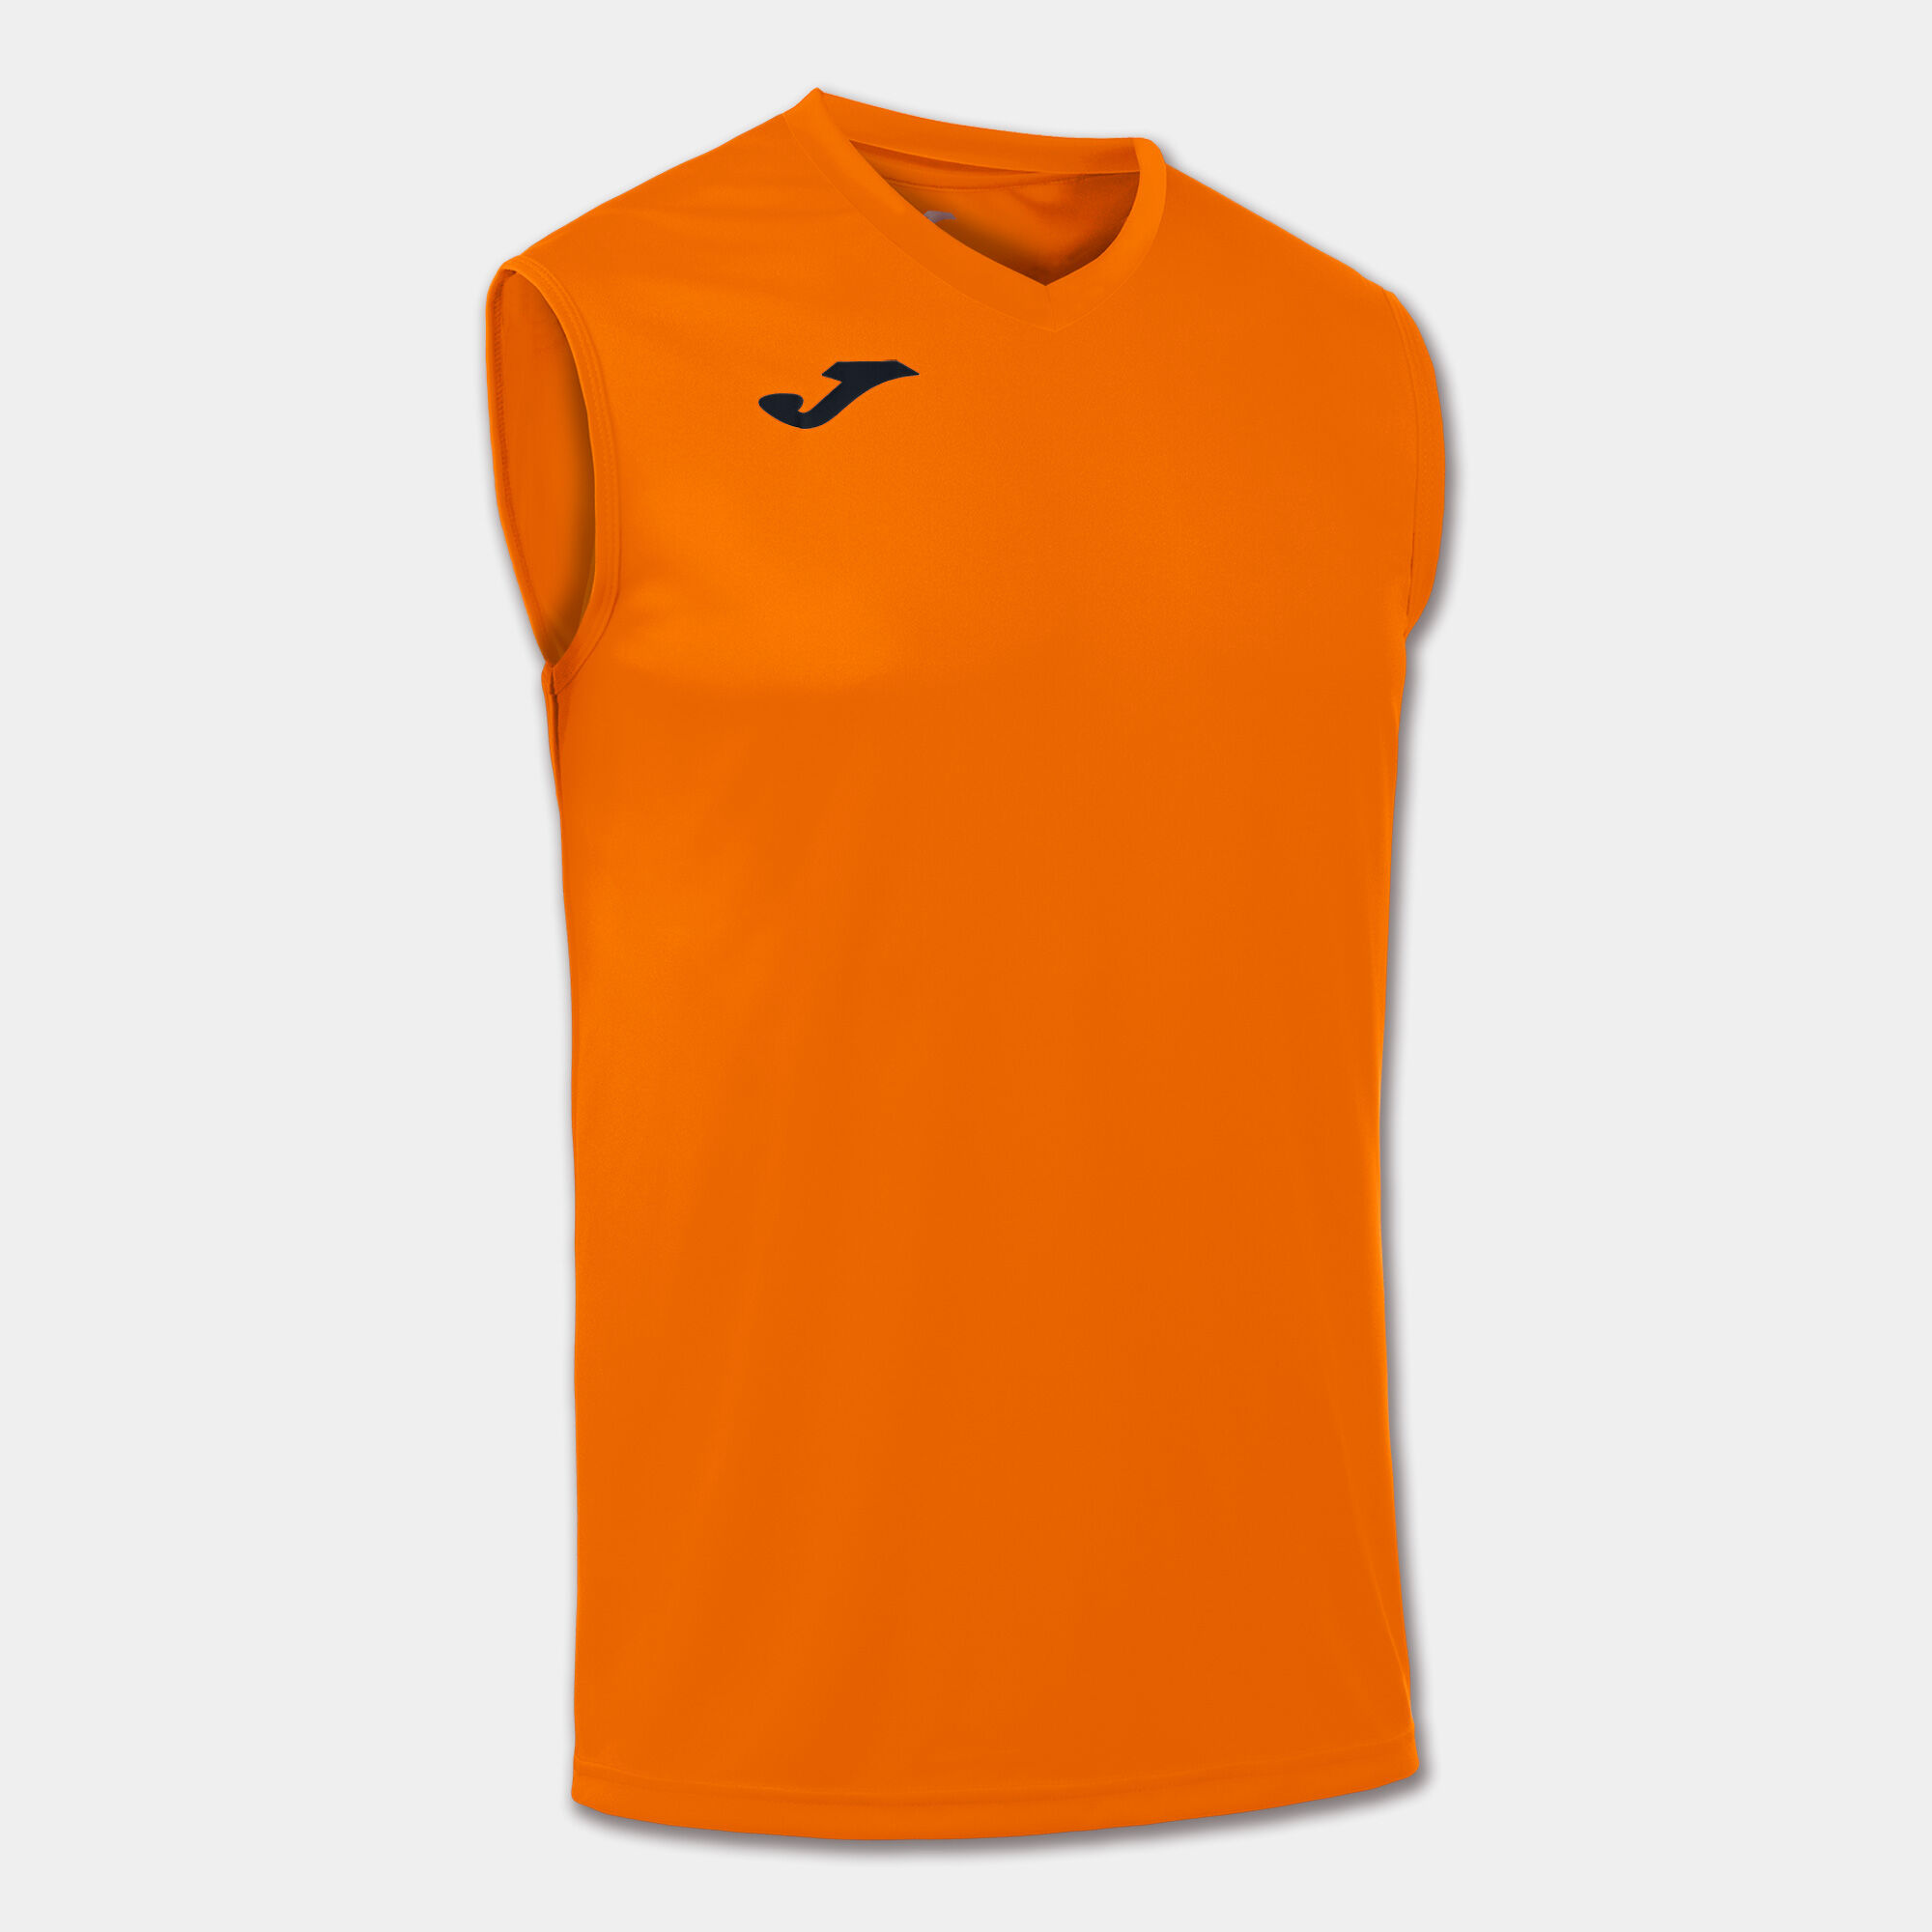 T-shirt de alça homem Combi laranja